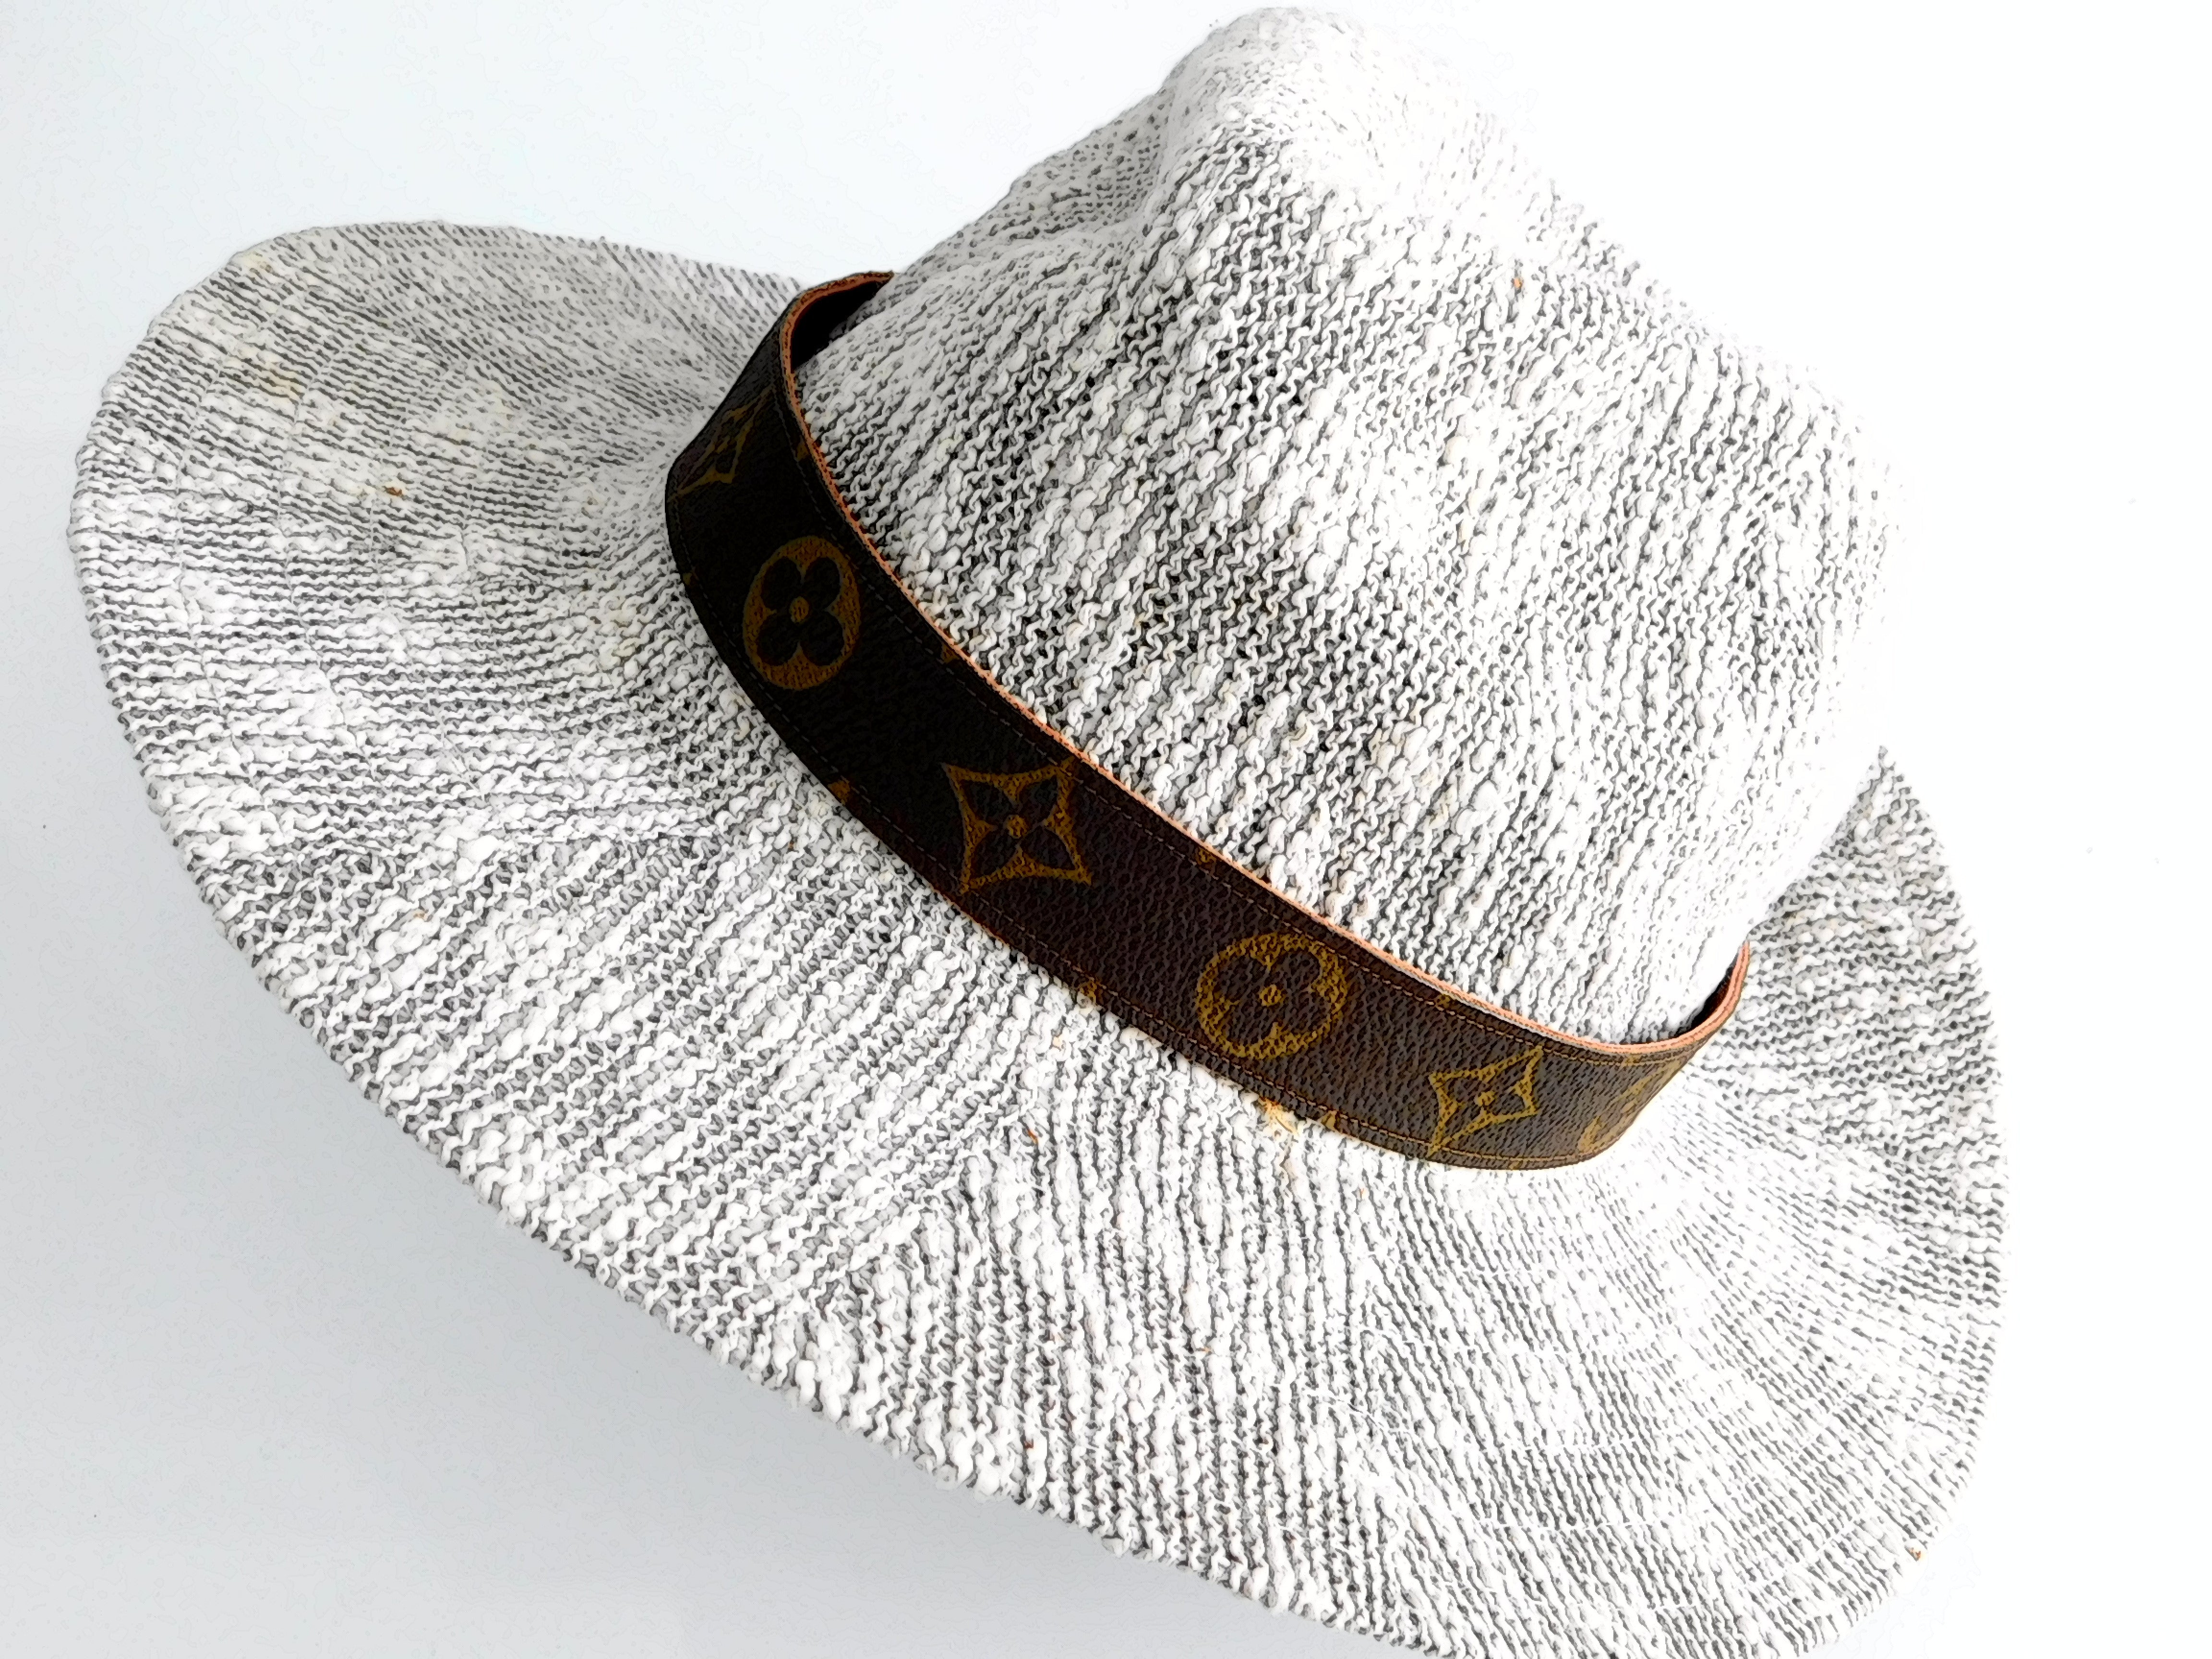 Louis Vuitton Cowboy Hat Bandwidth